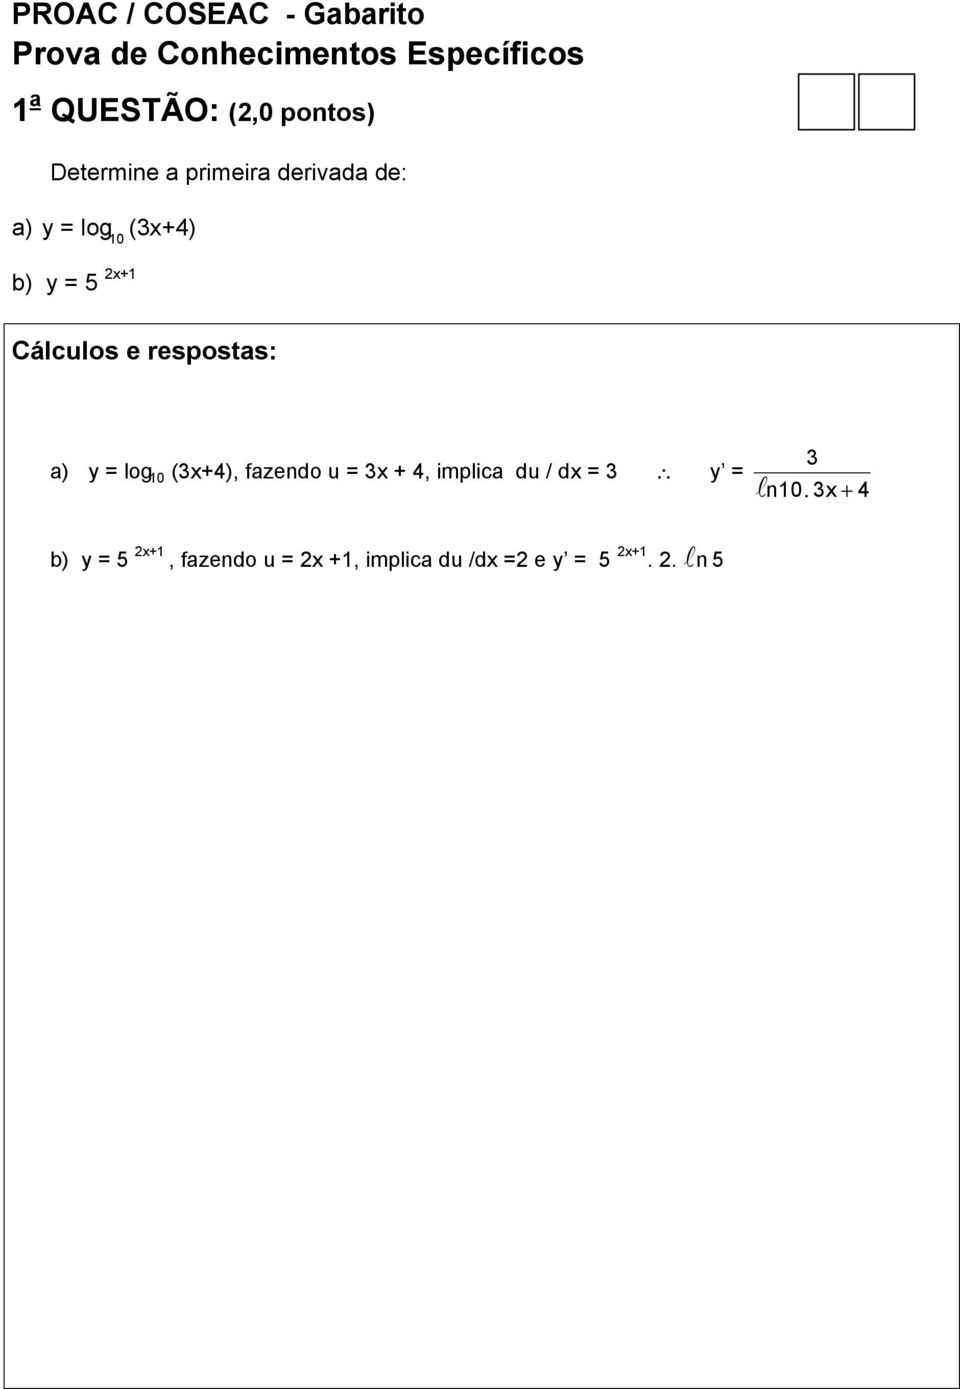 respostas: a) y = log (3x+4), fazendo u = 3x + 4, implica du / dx = 3 y = 10